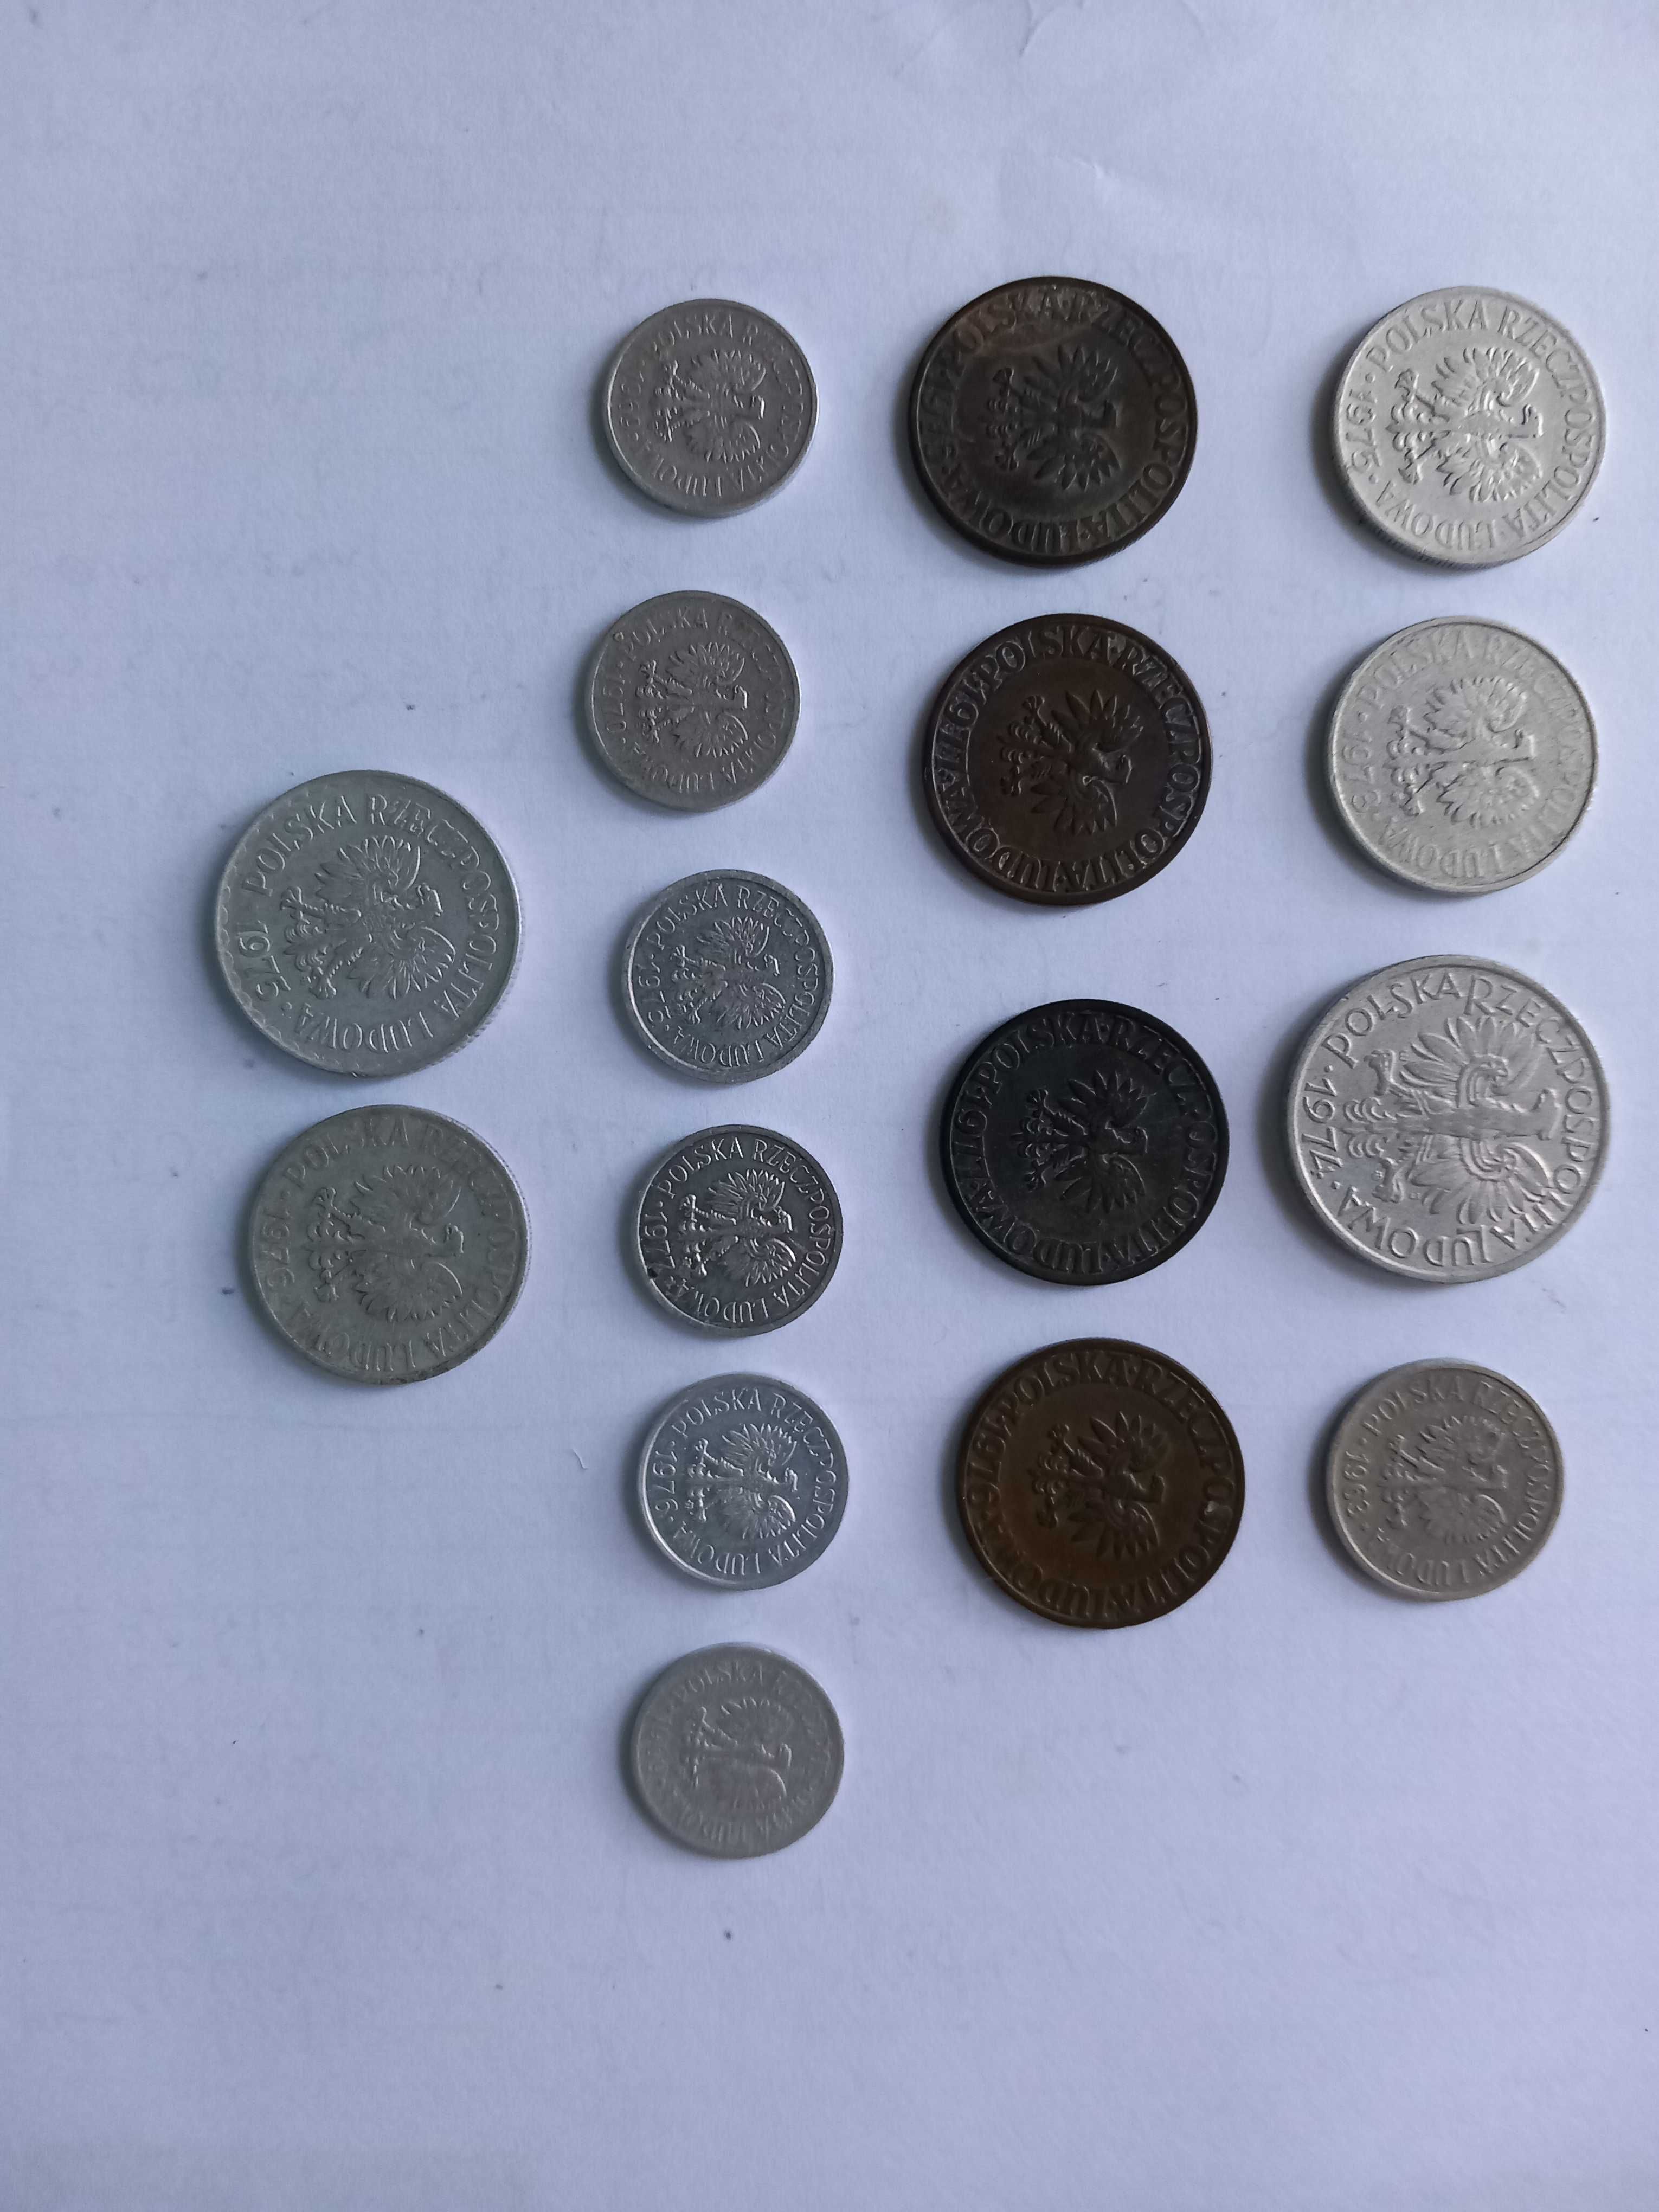 Stare monety z różnyh epok